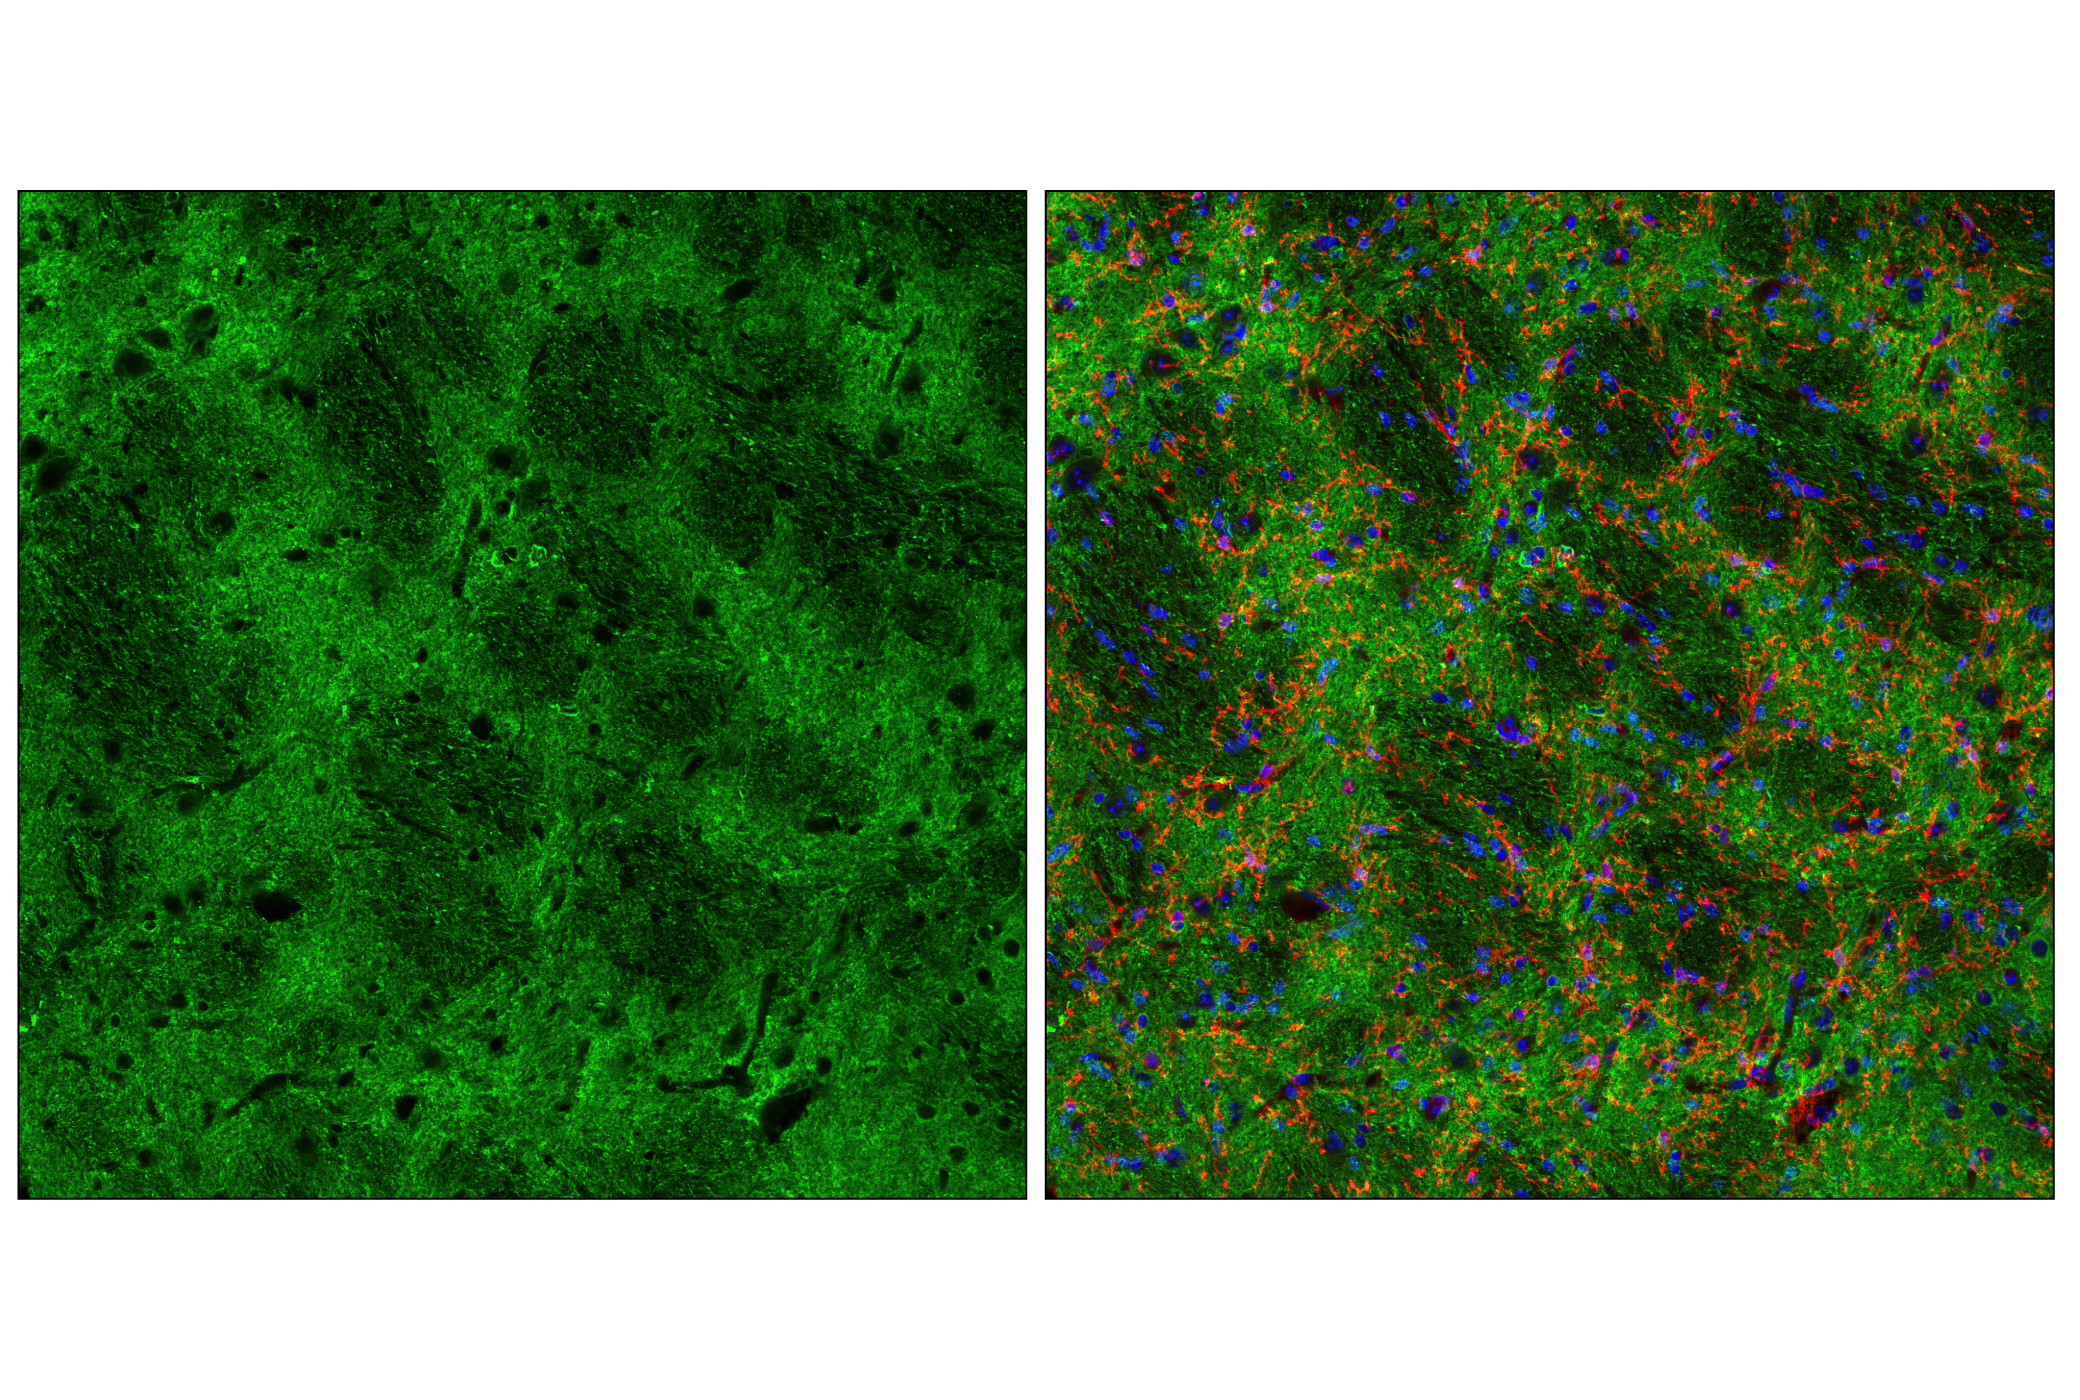  Image 51: Tau Mouse Model Neuronal Viability IF Antibody Sampler Kit